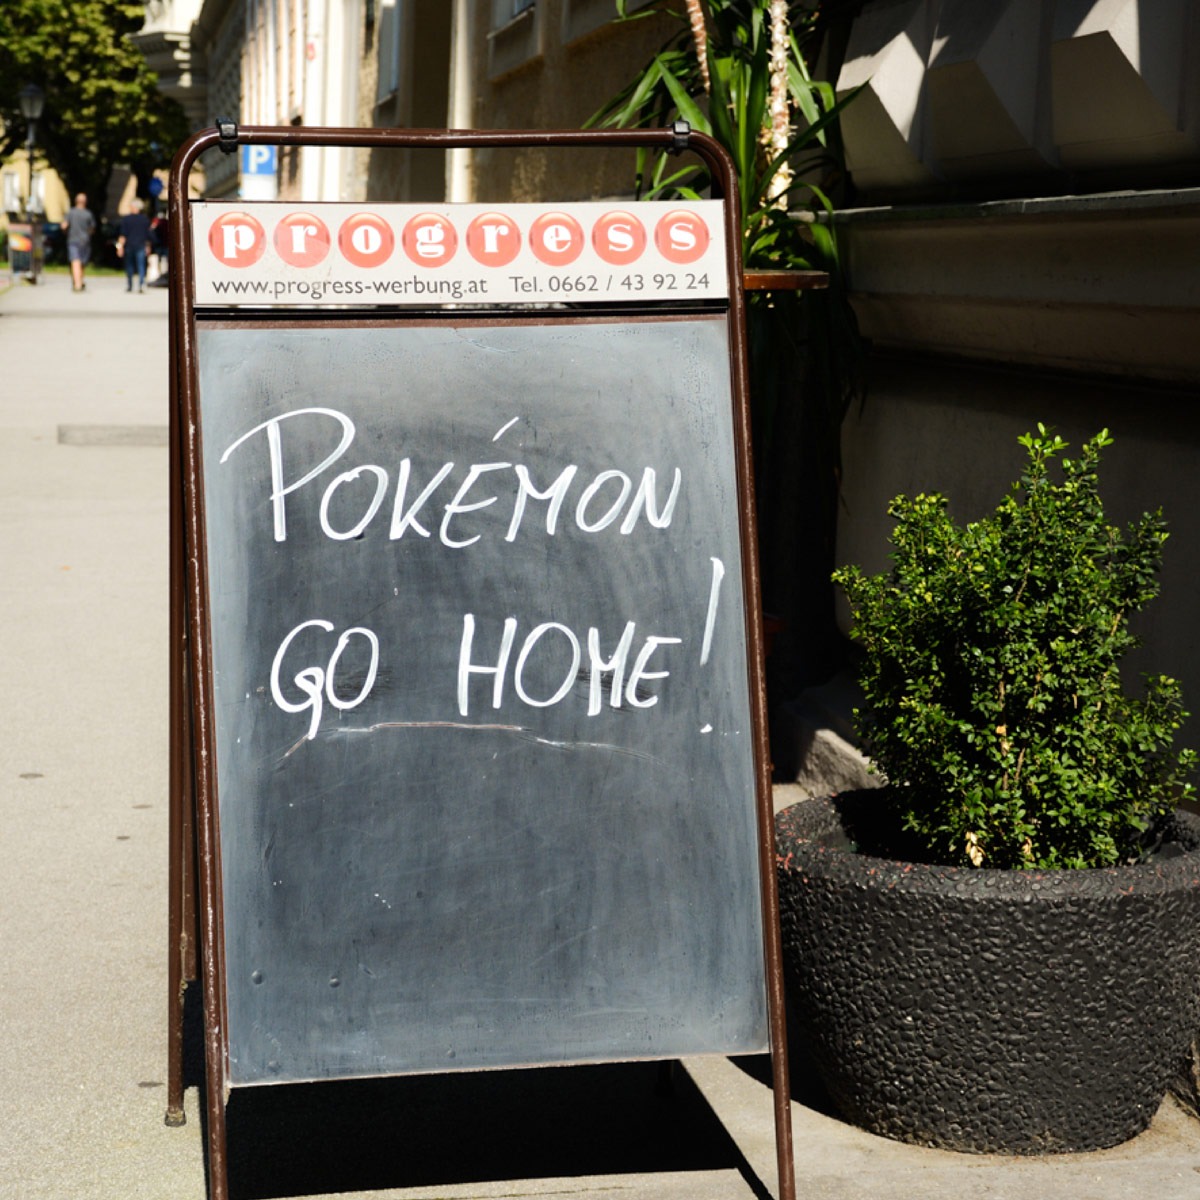 Pokemon Go Home!